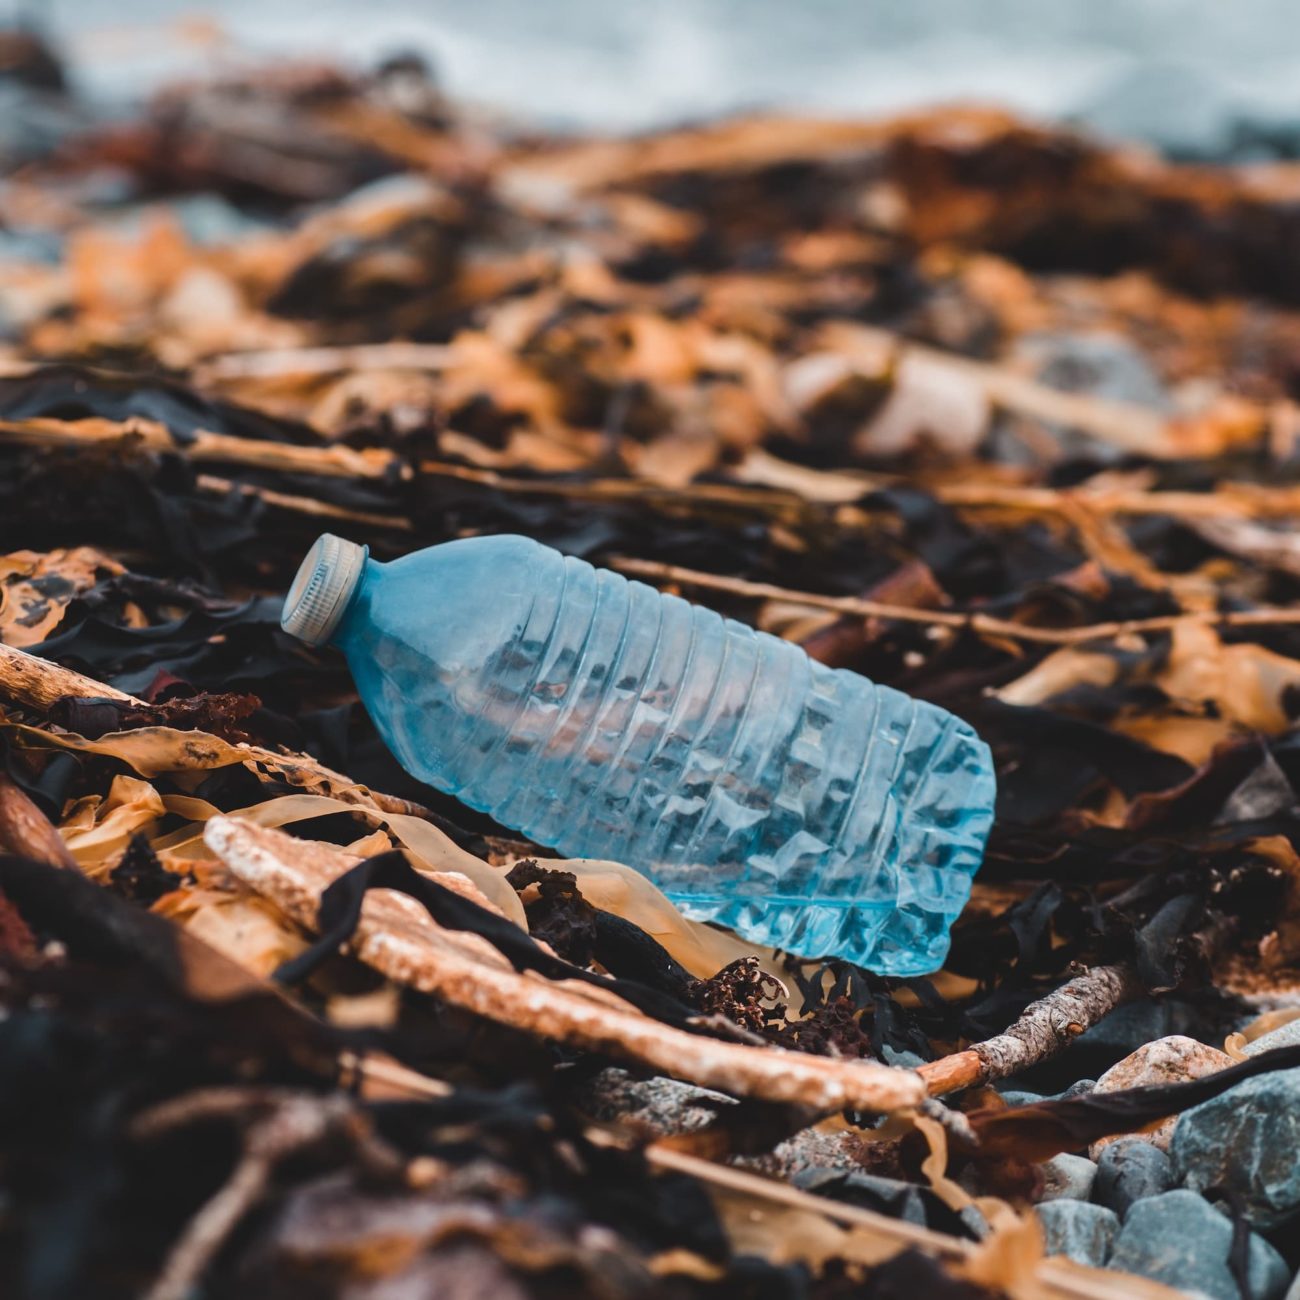 Plastic water bottle laying amongst organic debris next to water.